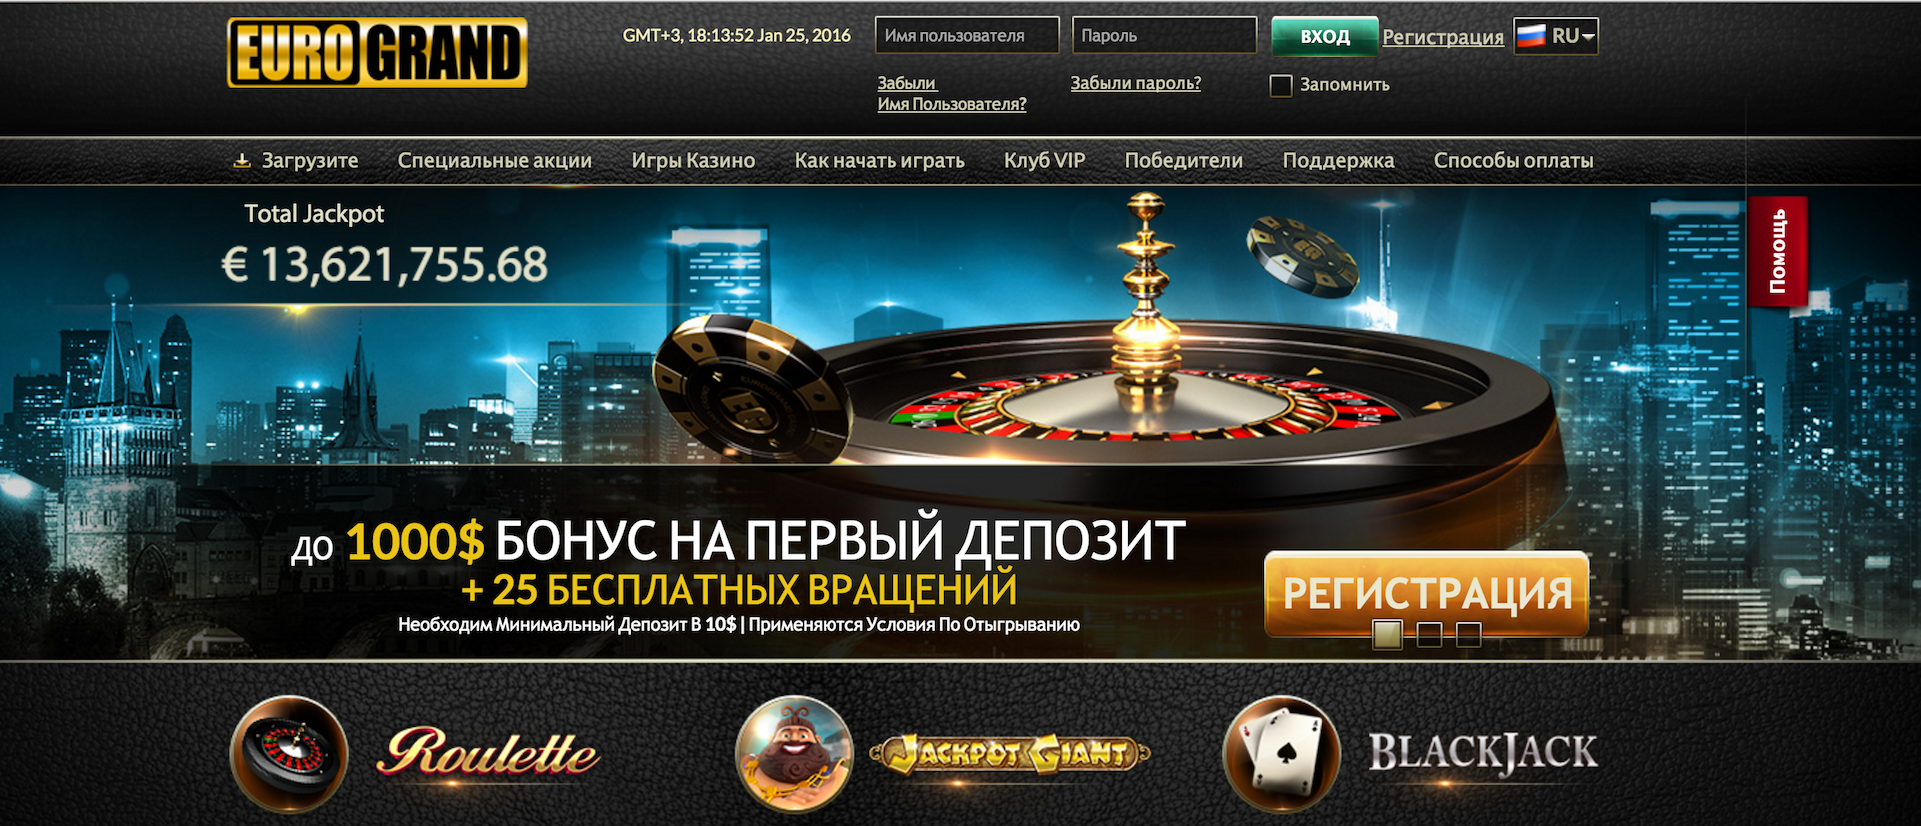 eurogrand casino официальный сайт